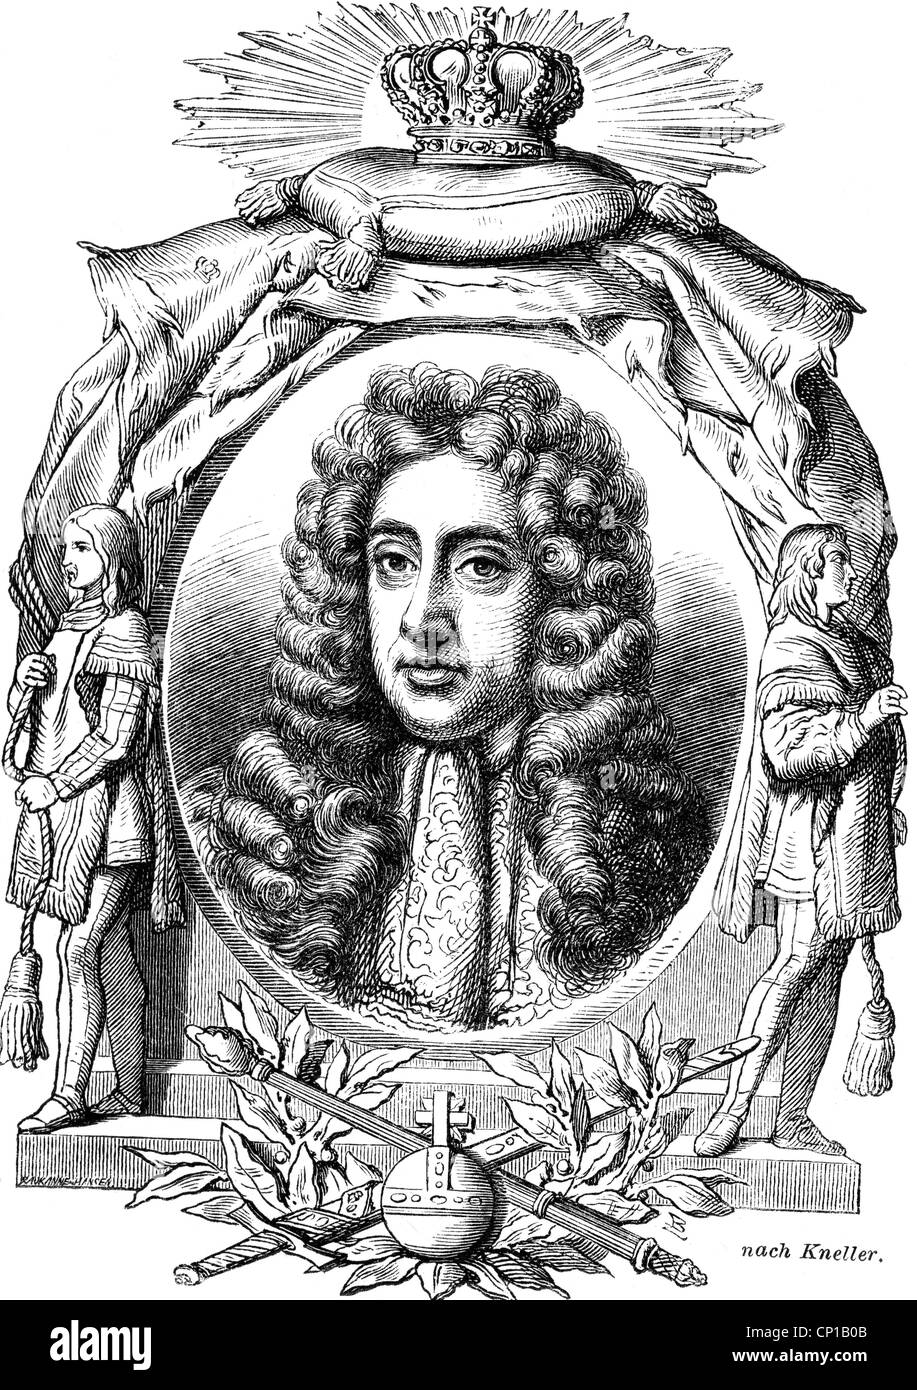 James II, 24.10.1633 - 17.9.1701, King of England 6.2.1685 - 11.12.1688, portrait, wood engraving, 19th century, , Stock Photo